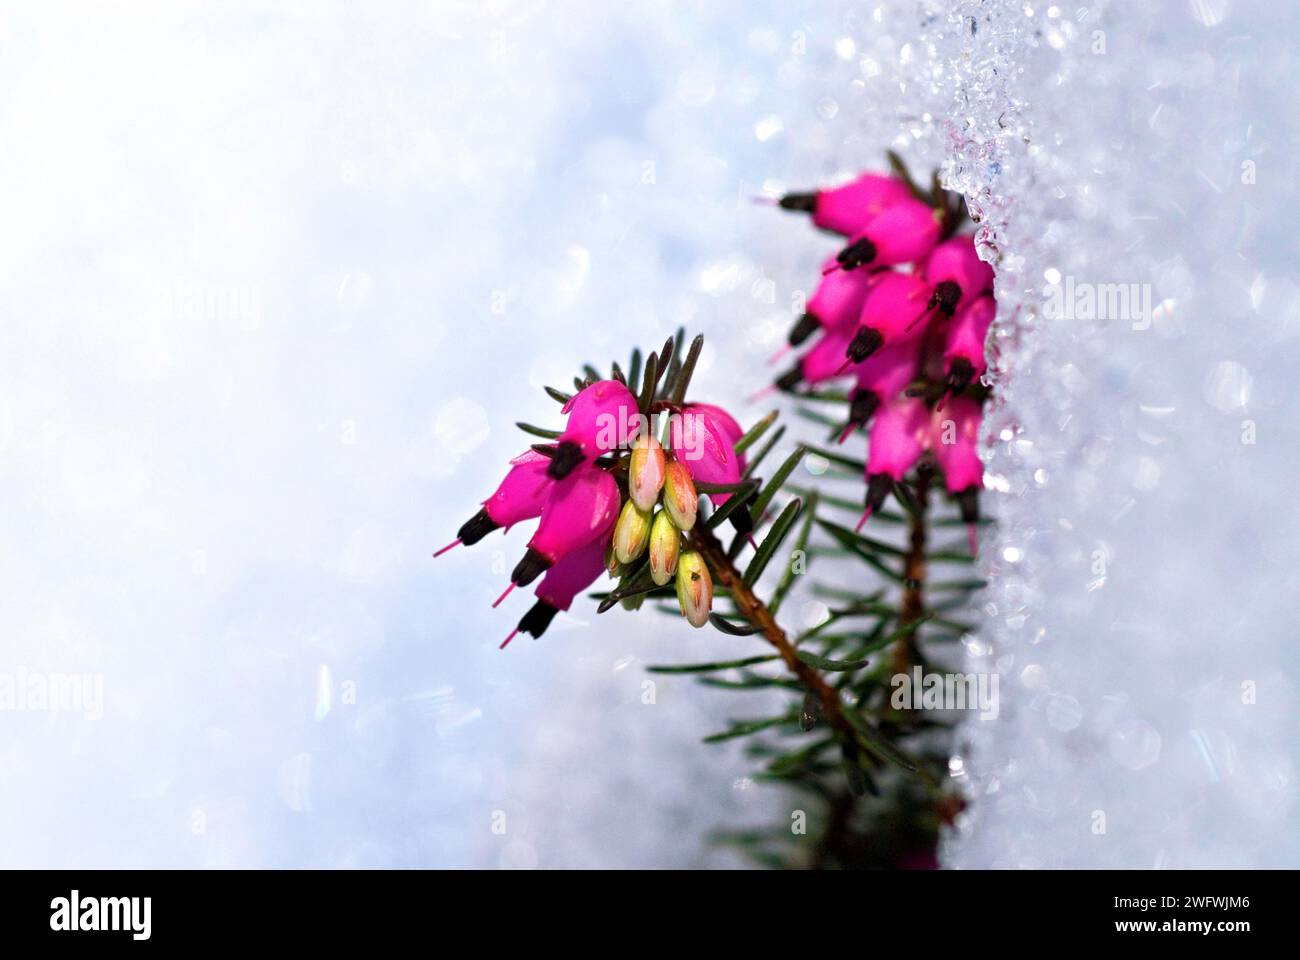 Winter heather or alpine heather (Erica carnea), flowers in the snow Stock Photo